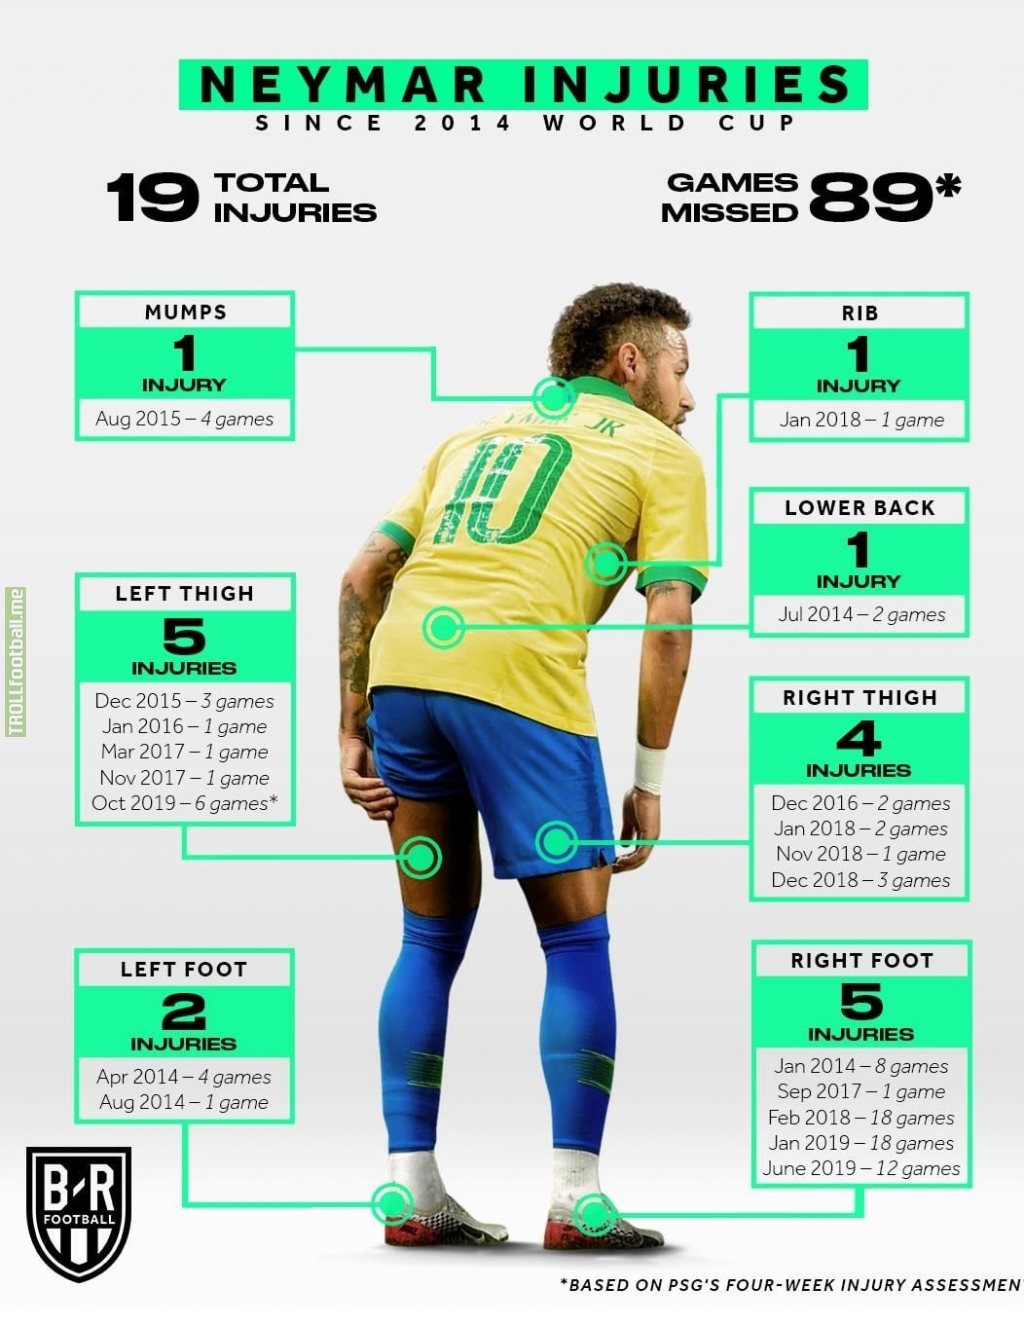 Neymar 's injury record since 2014 World Cup